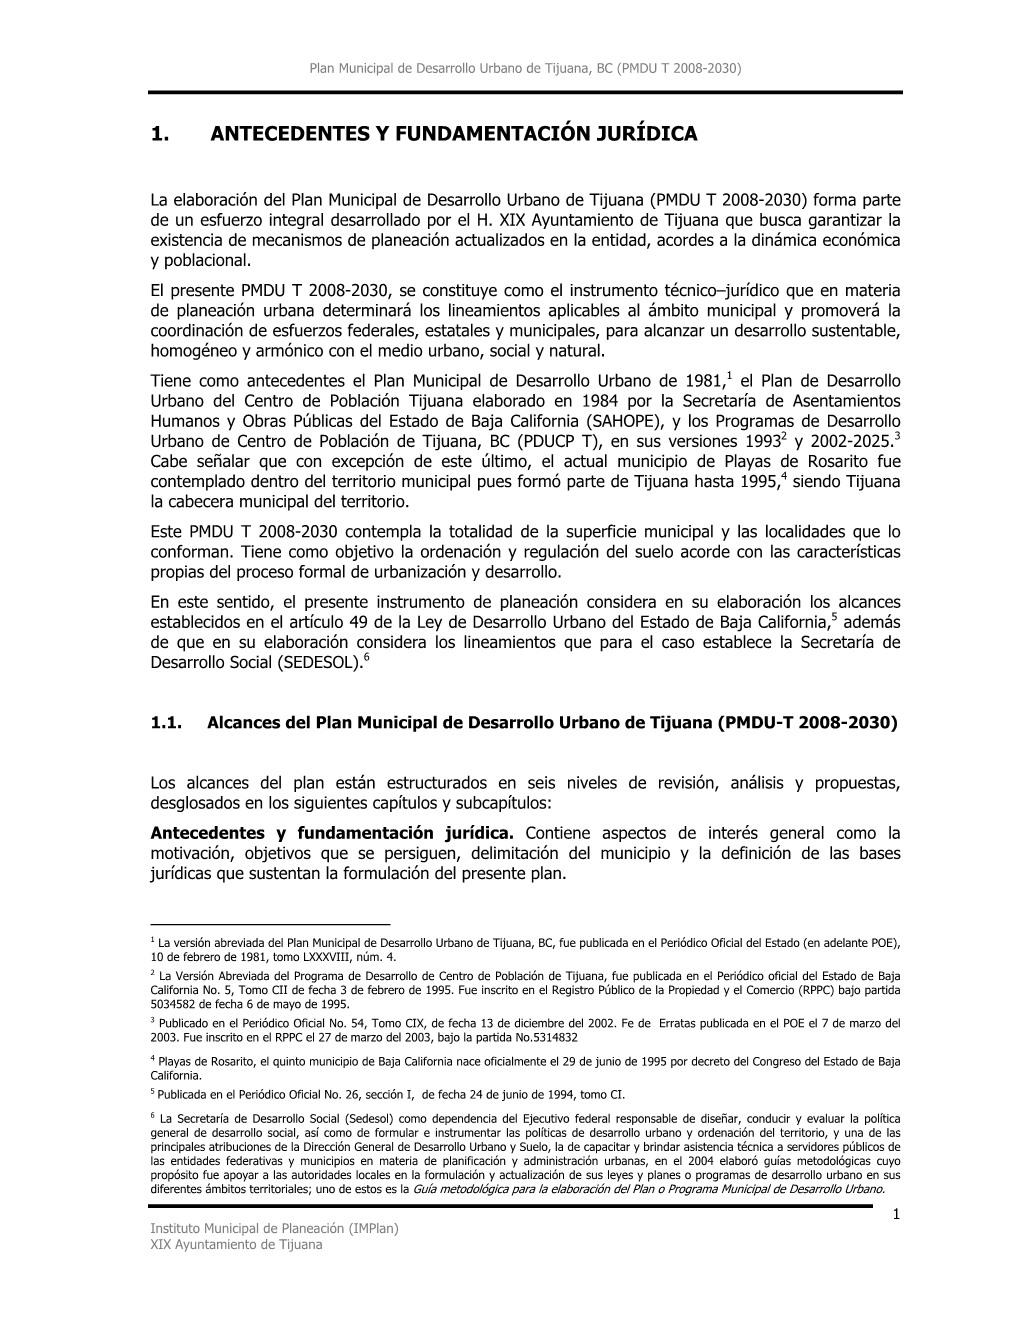 Versión Periódico Oficial PMDUT 2008-2030